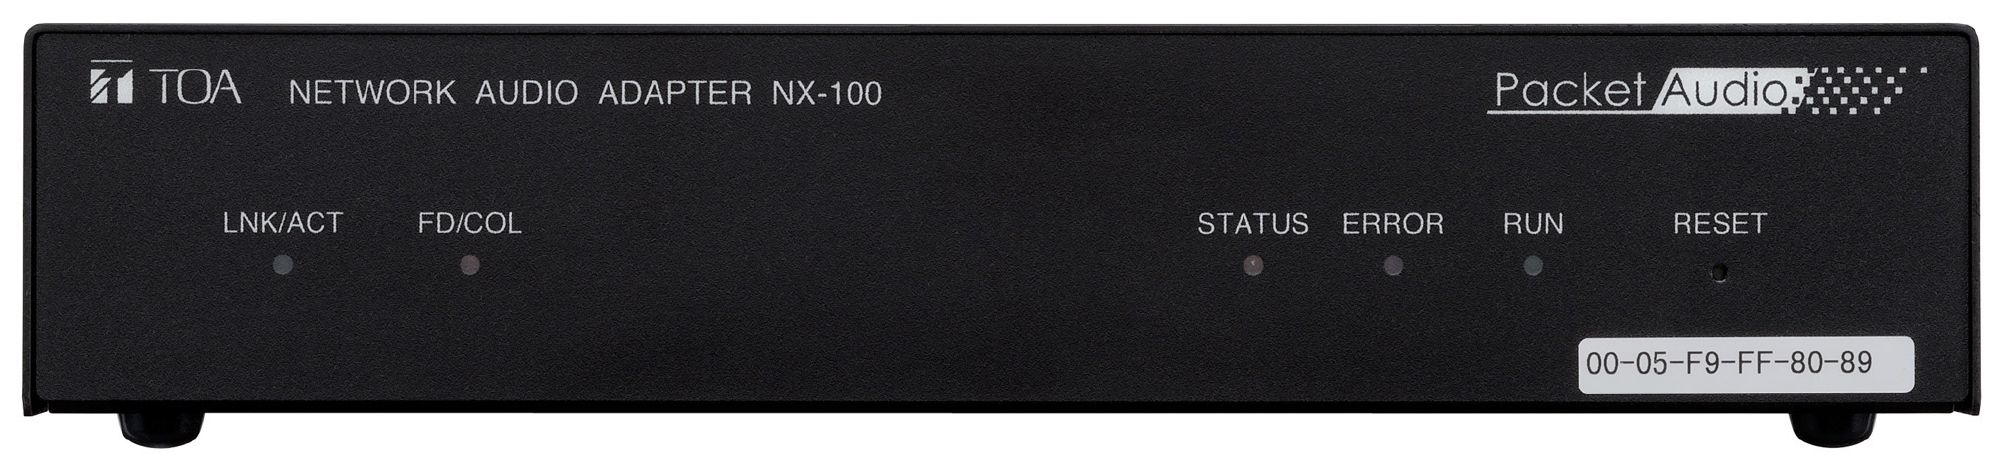 NX-100_pfle.jpg